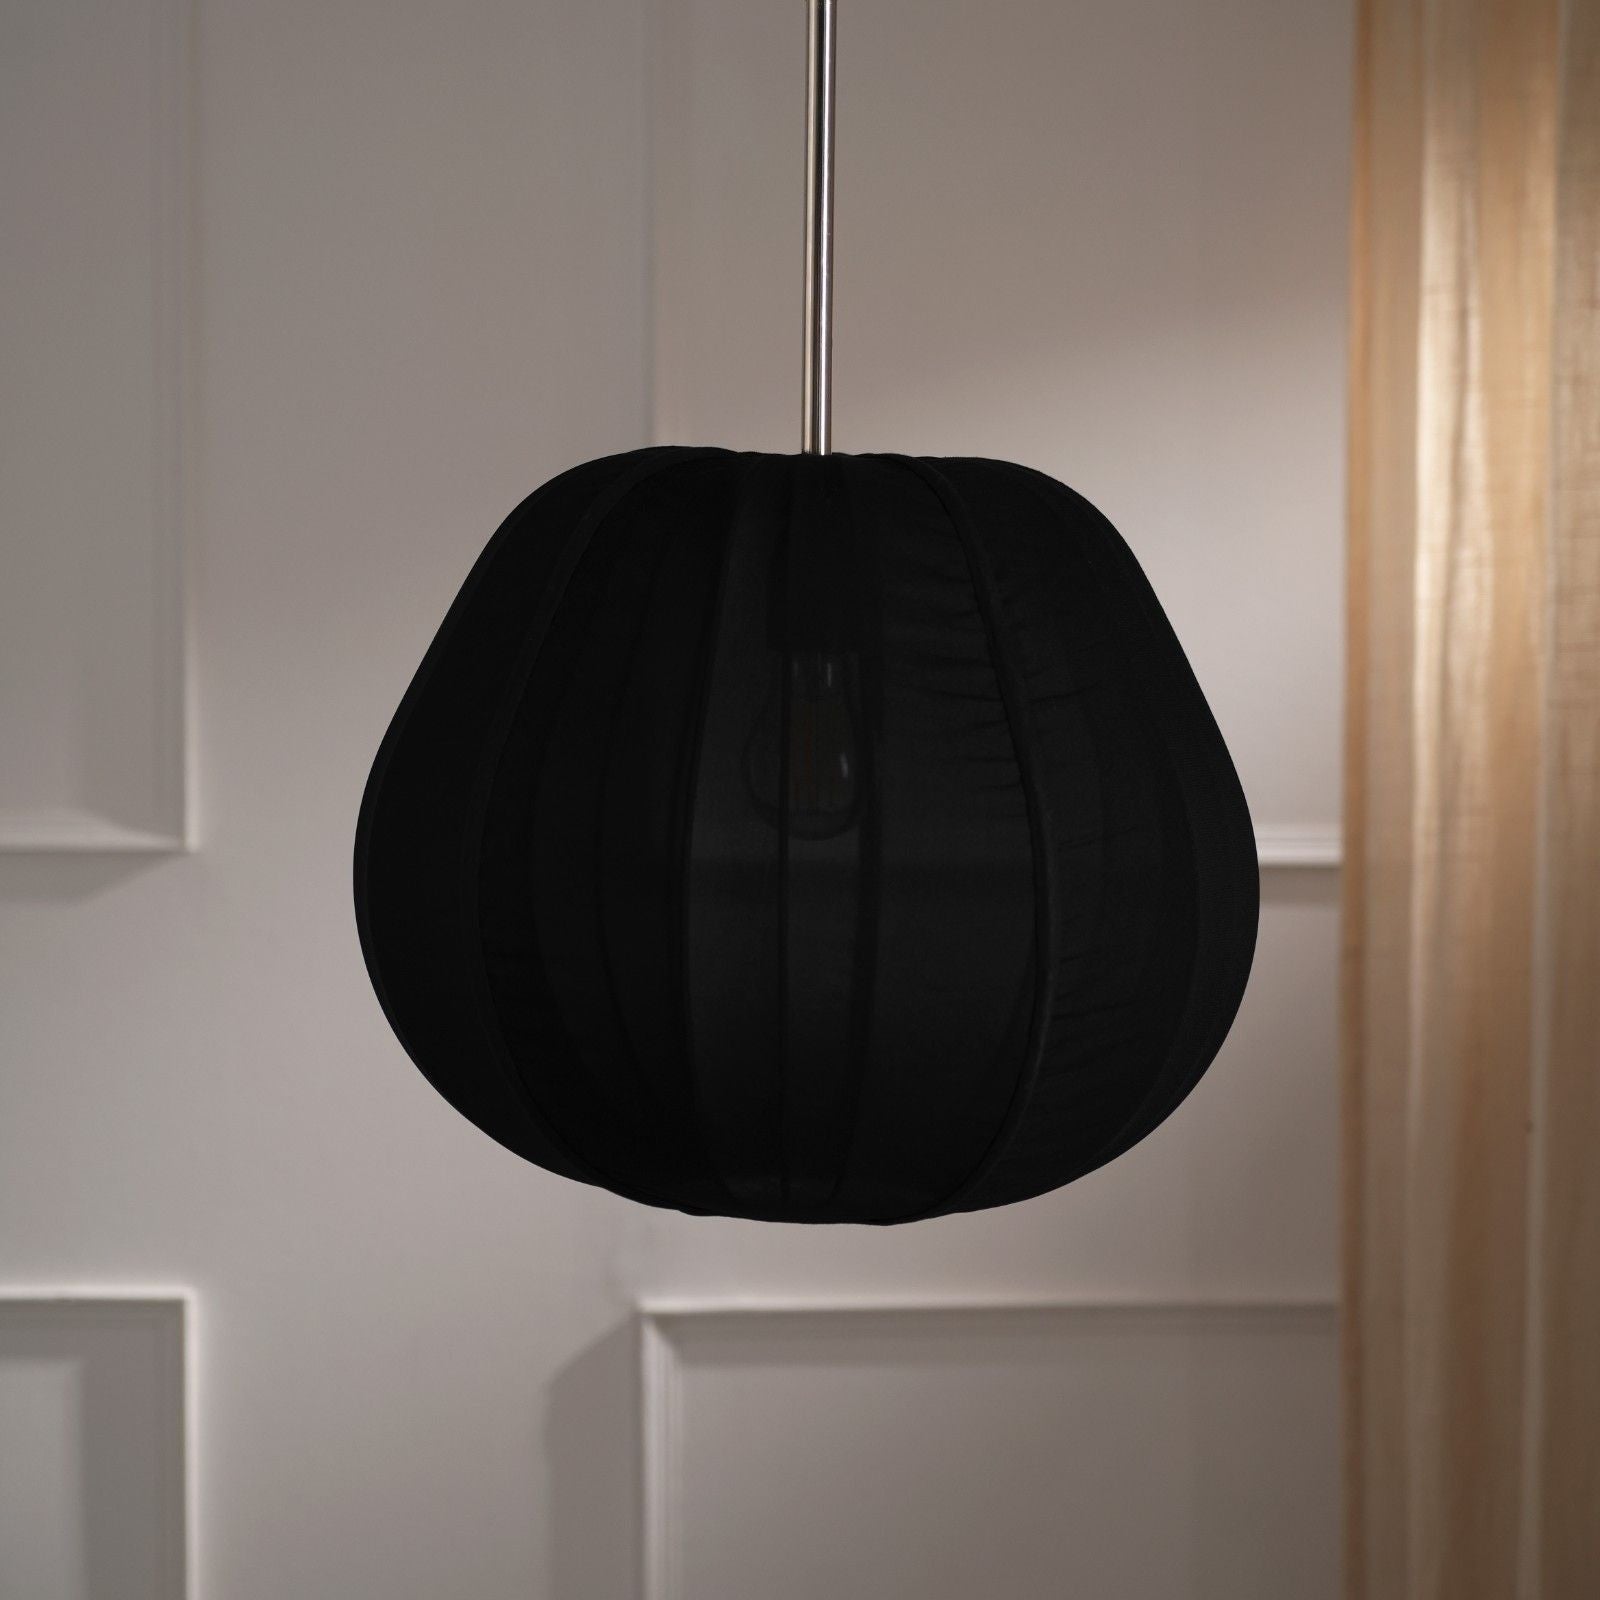 Luxe Collection - Berlin Lamp  - Premium Chiffon Fabric, Metallic Spacer, Soft Warm Glow, Mood Enhancement Lighting